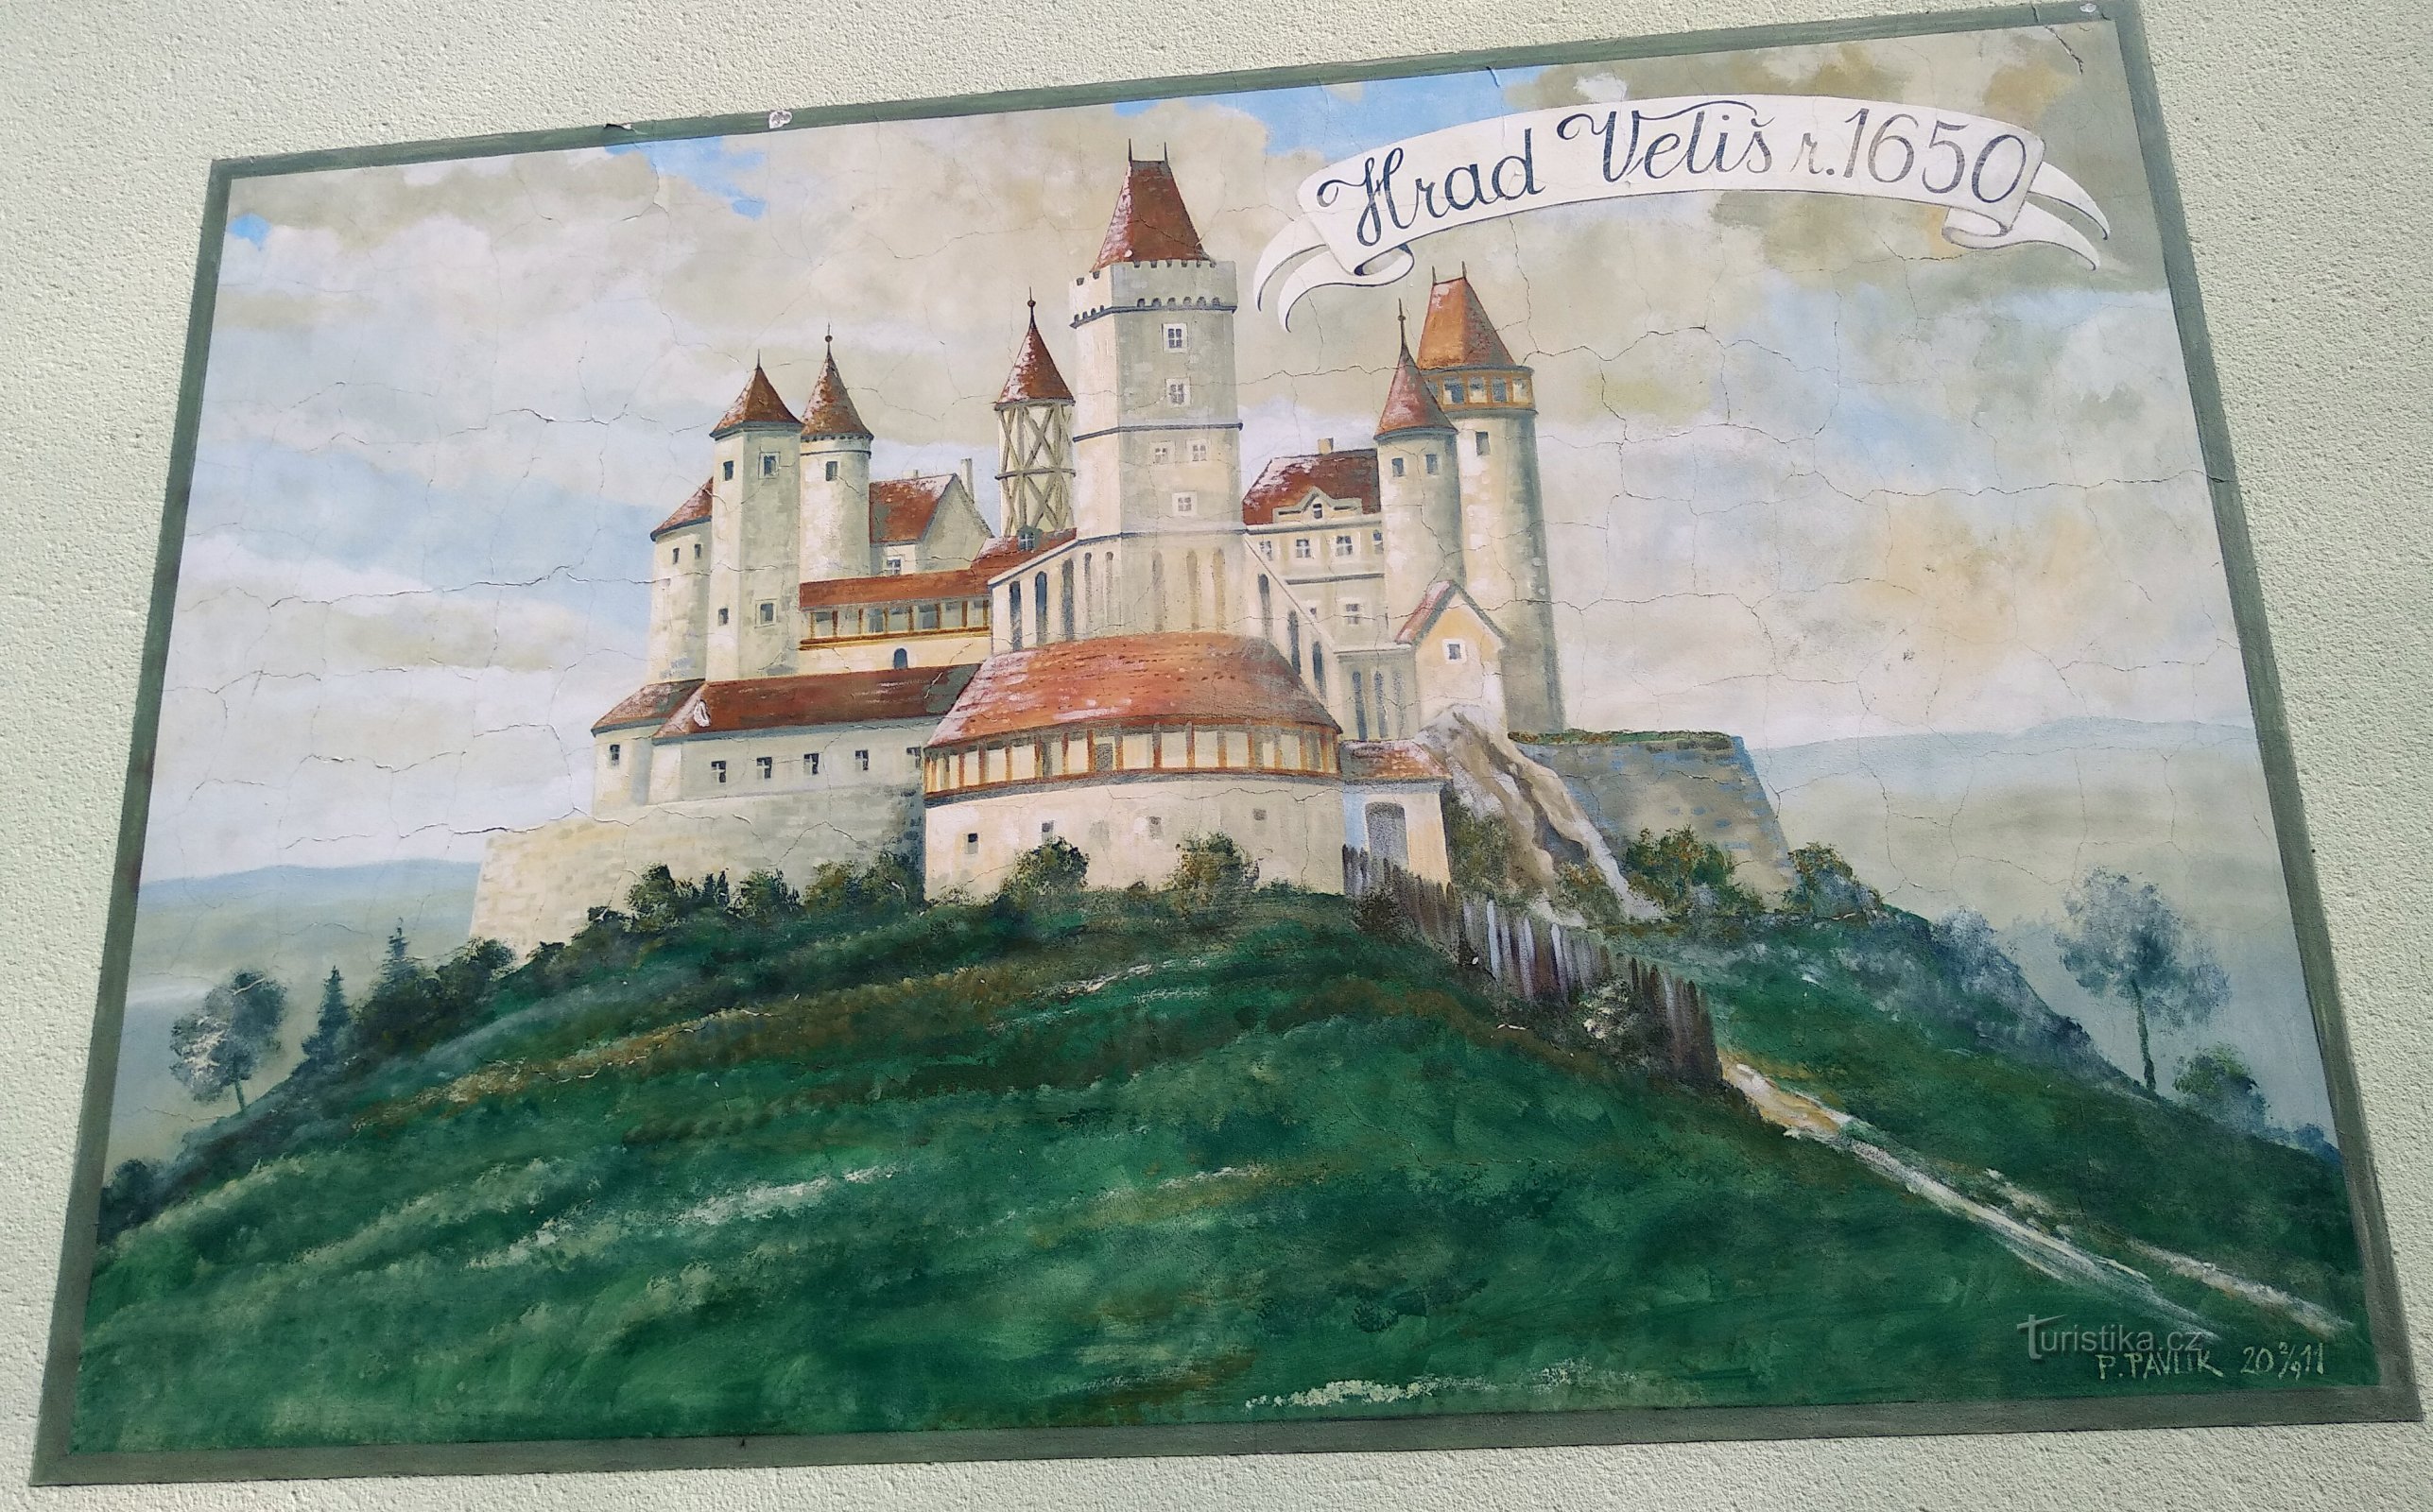 fresk w miejscowości Podhradí - obraz zamku Veliš